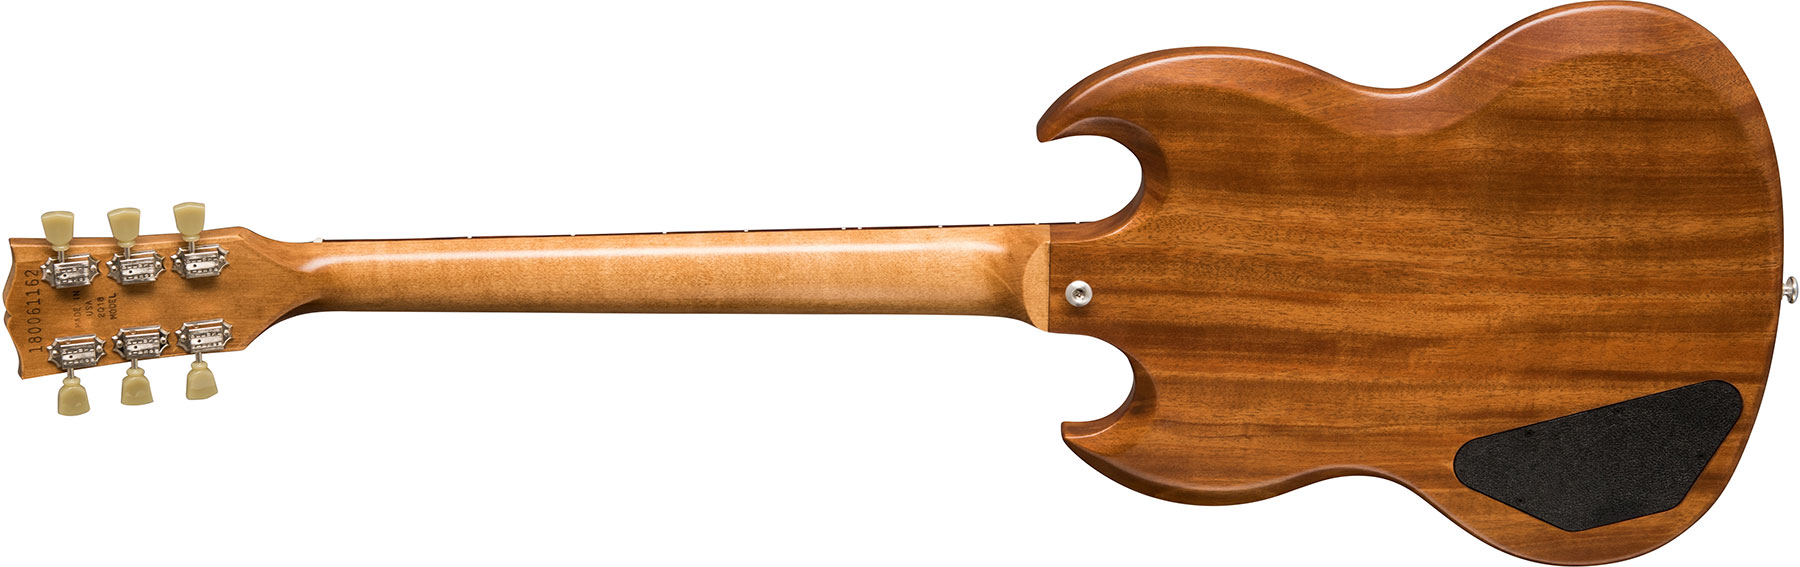 Gibson Sg Standard Tribute - Natural Walnut - Guitarra eléctrica de doble corte - Variation 1